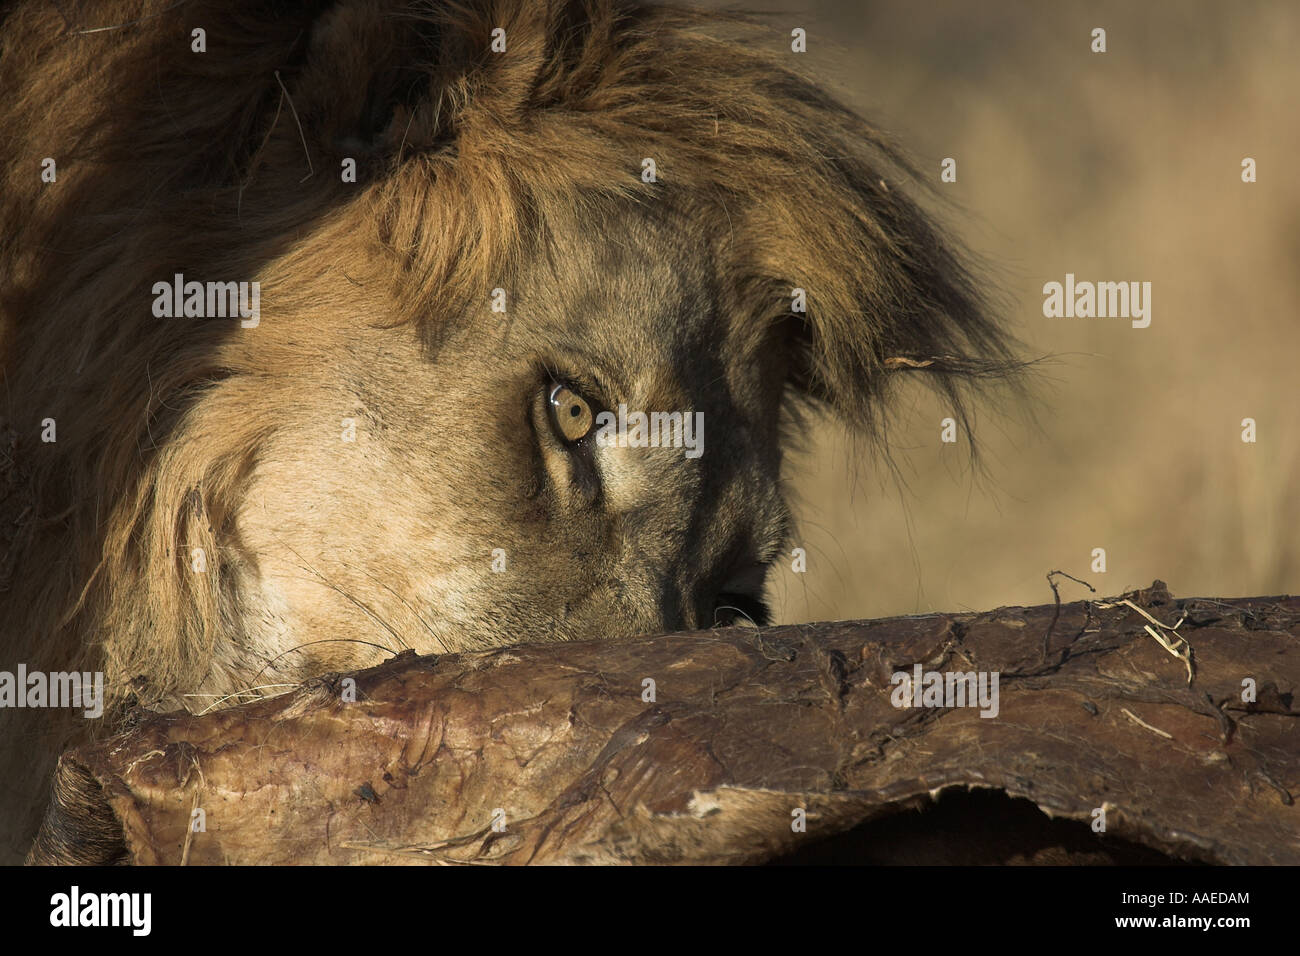 Wild lion eating killed giraffe - South Africa Stock Photo